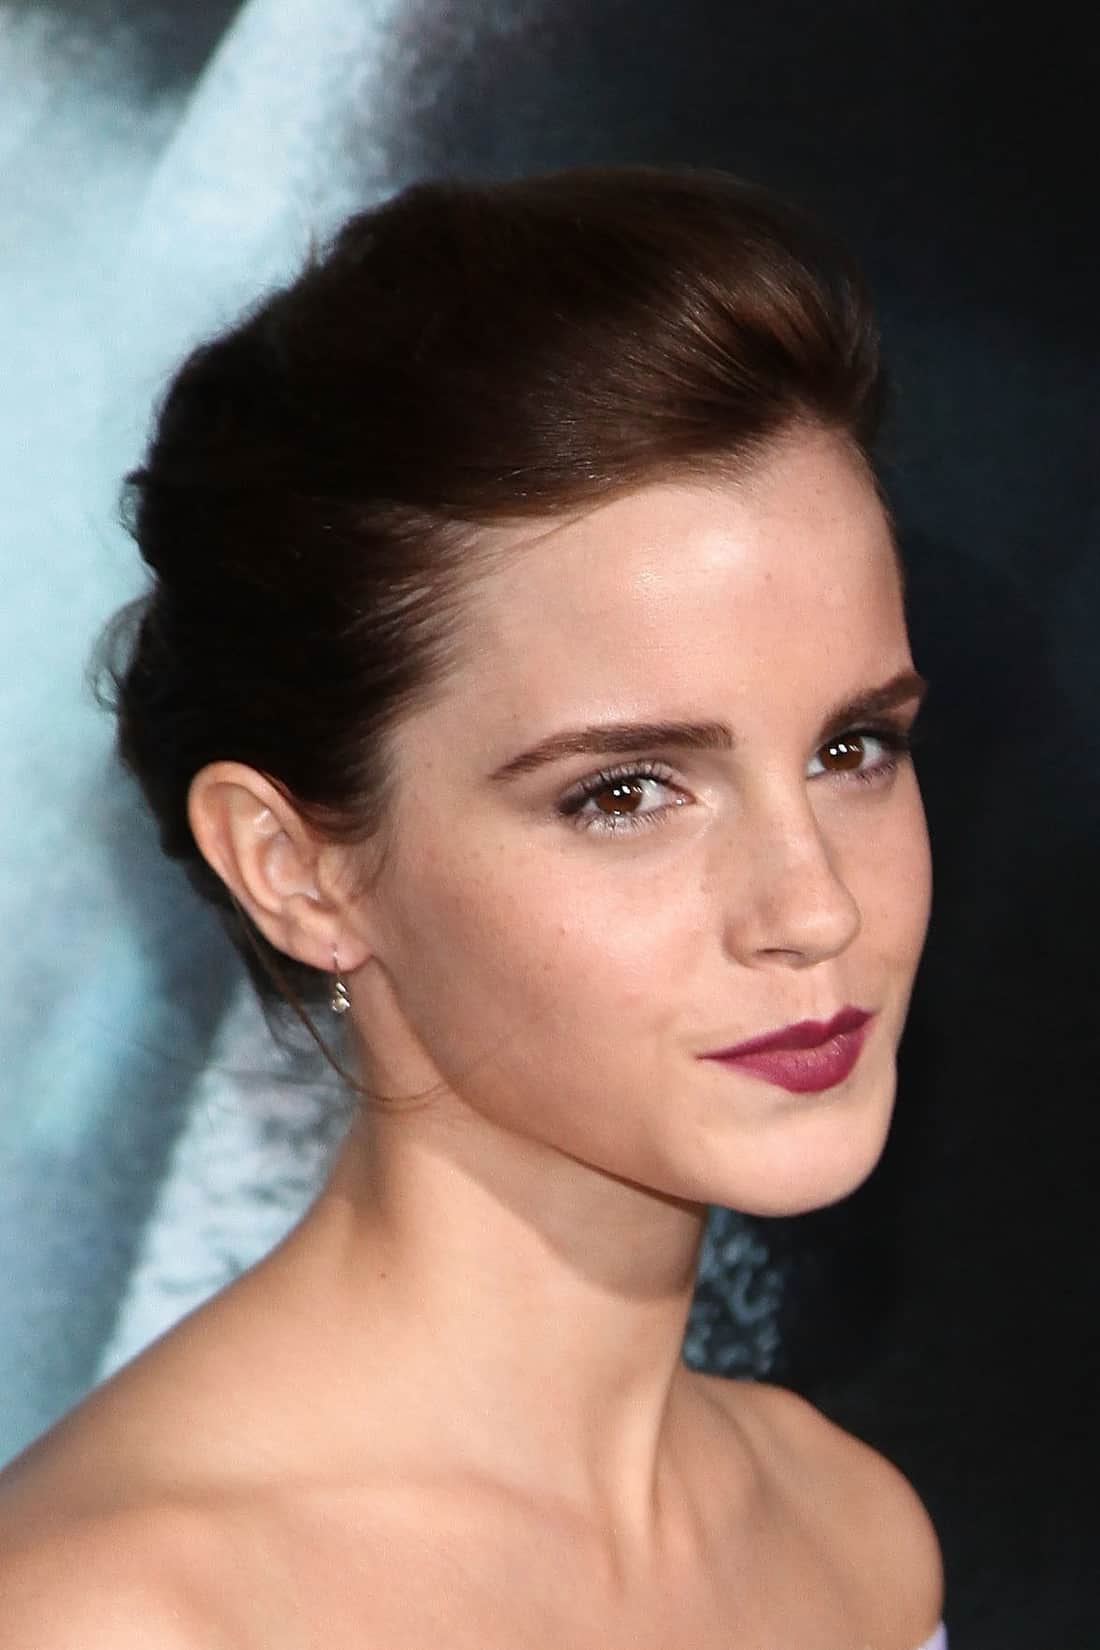 Emma Watson in a White Elegant Mini Dress at the "Gravity" Premiere in NY